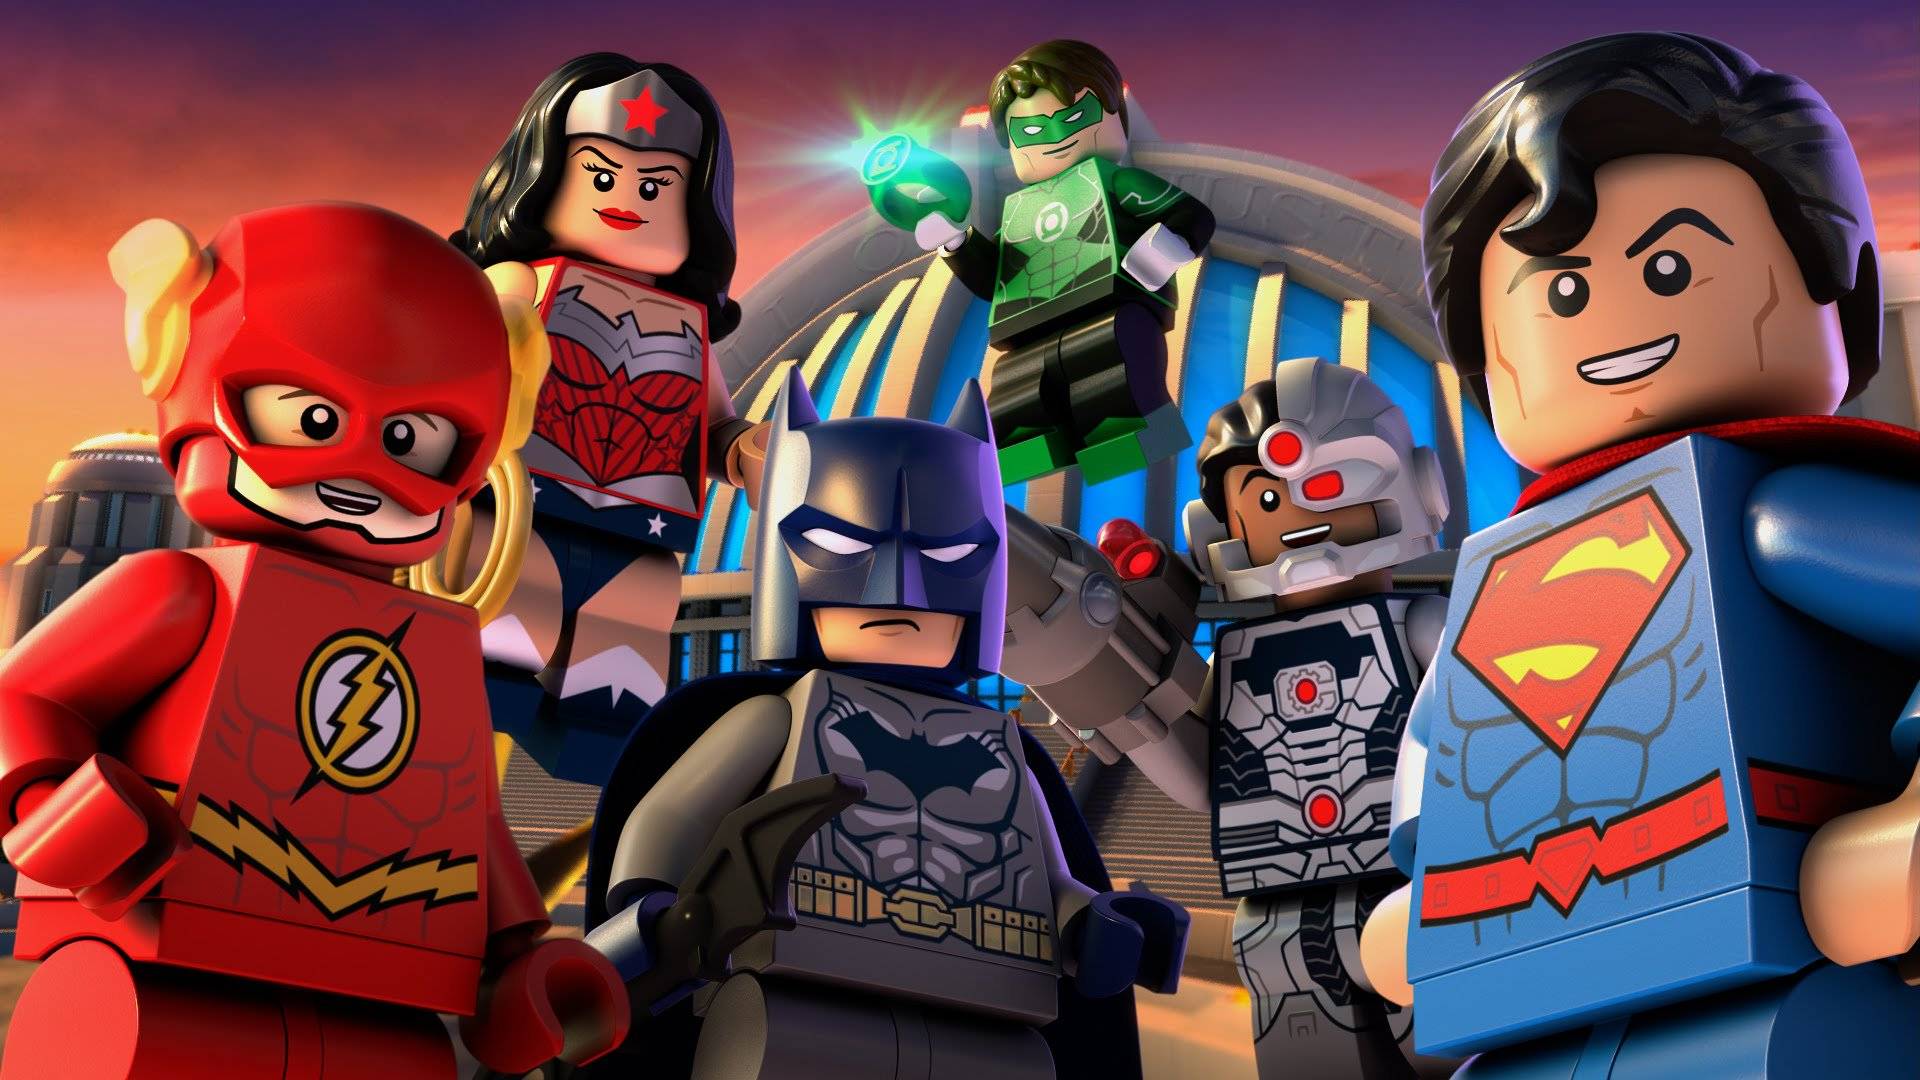 Lego DC Comics Superheroes: Justice League - Gotham City Breakout / Lego DC Comics Superheroes: Justice League - Gotham City Breakout (2016)